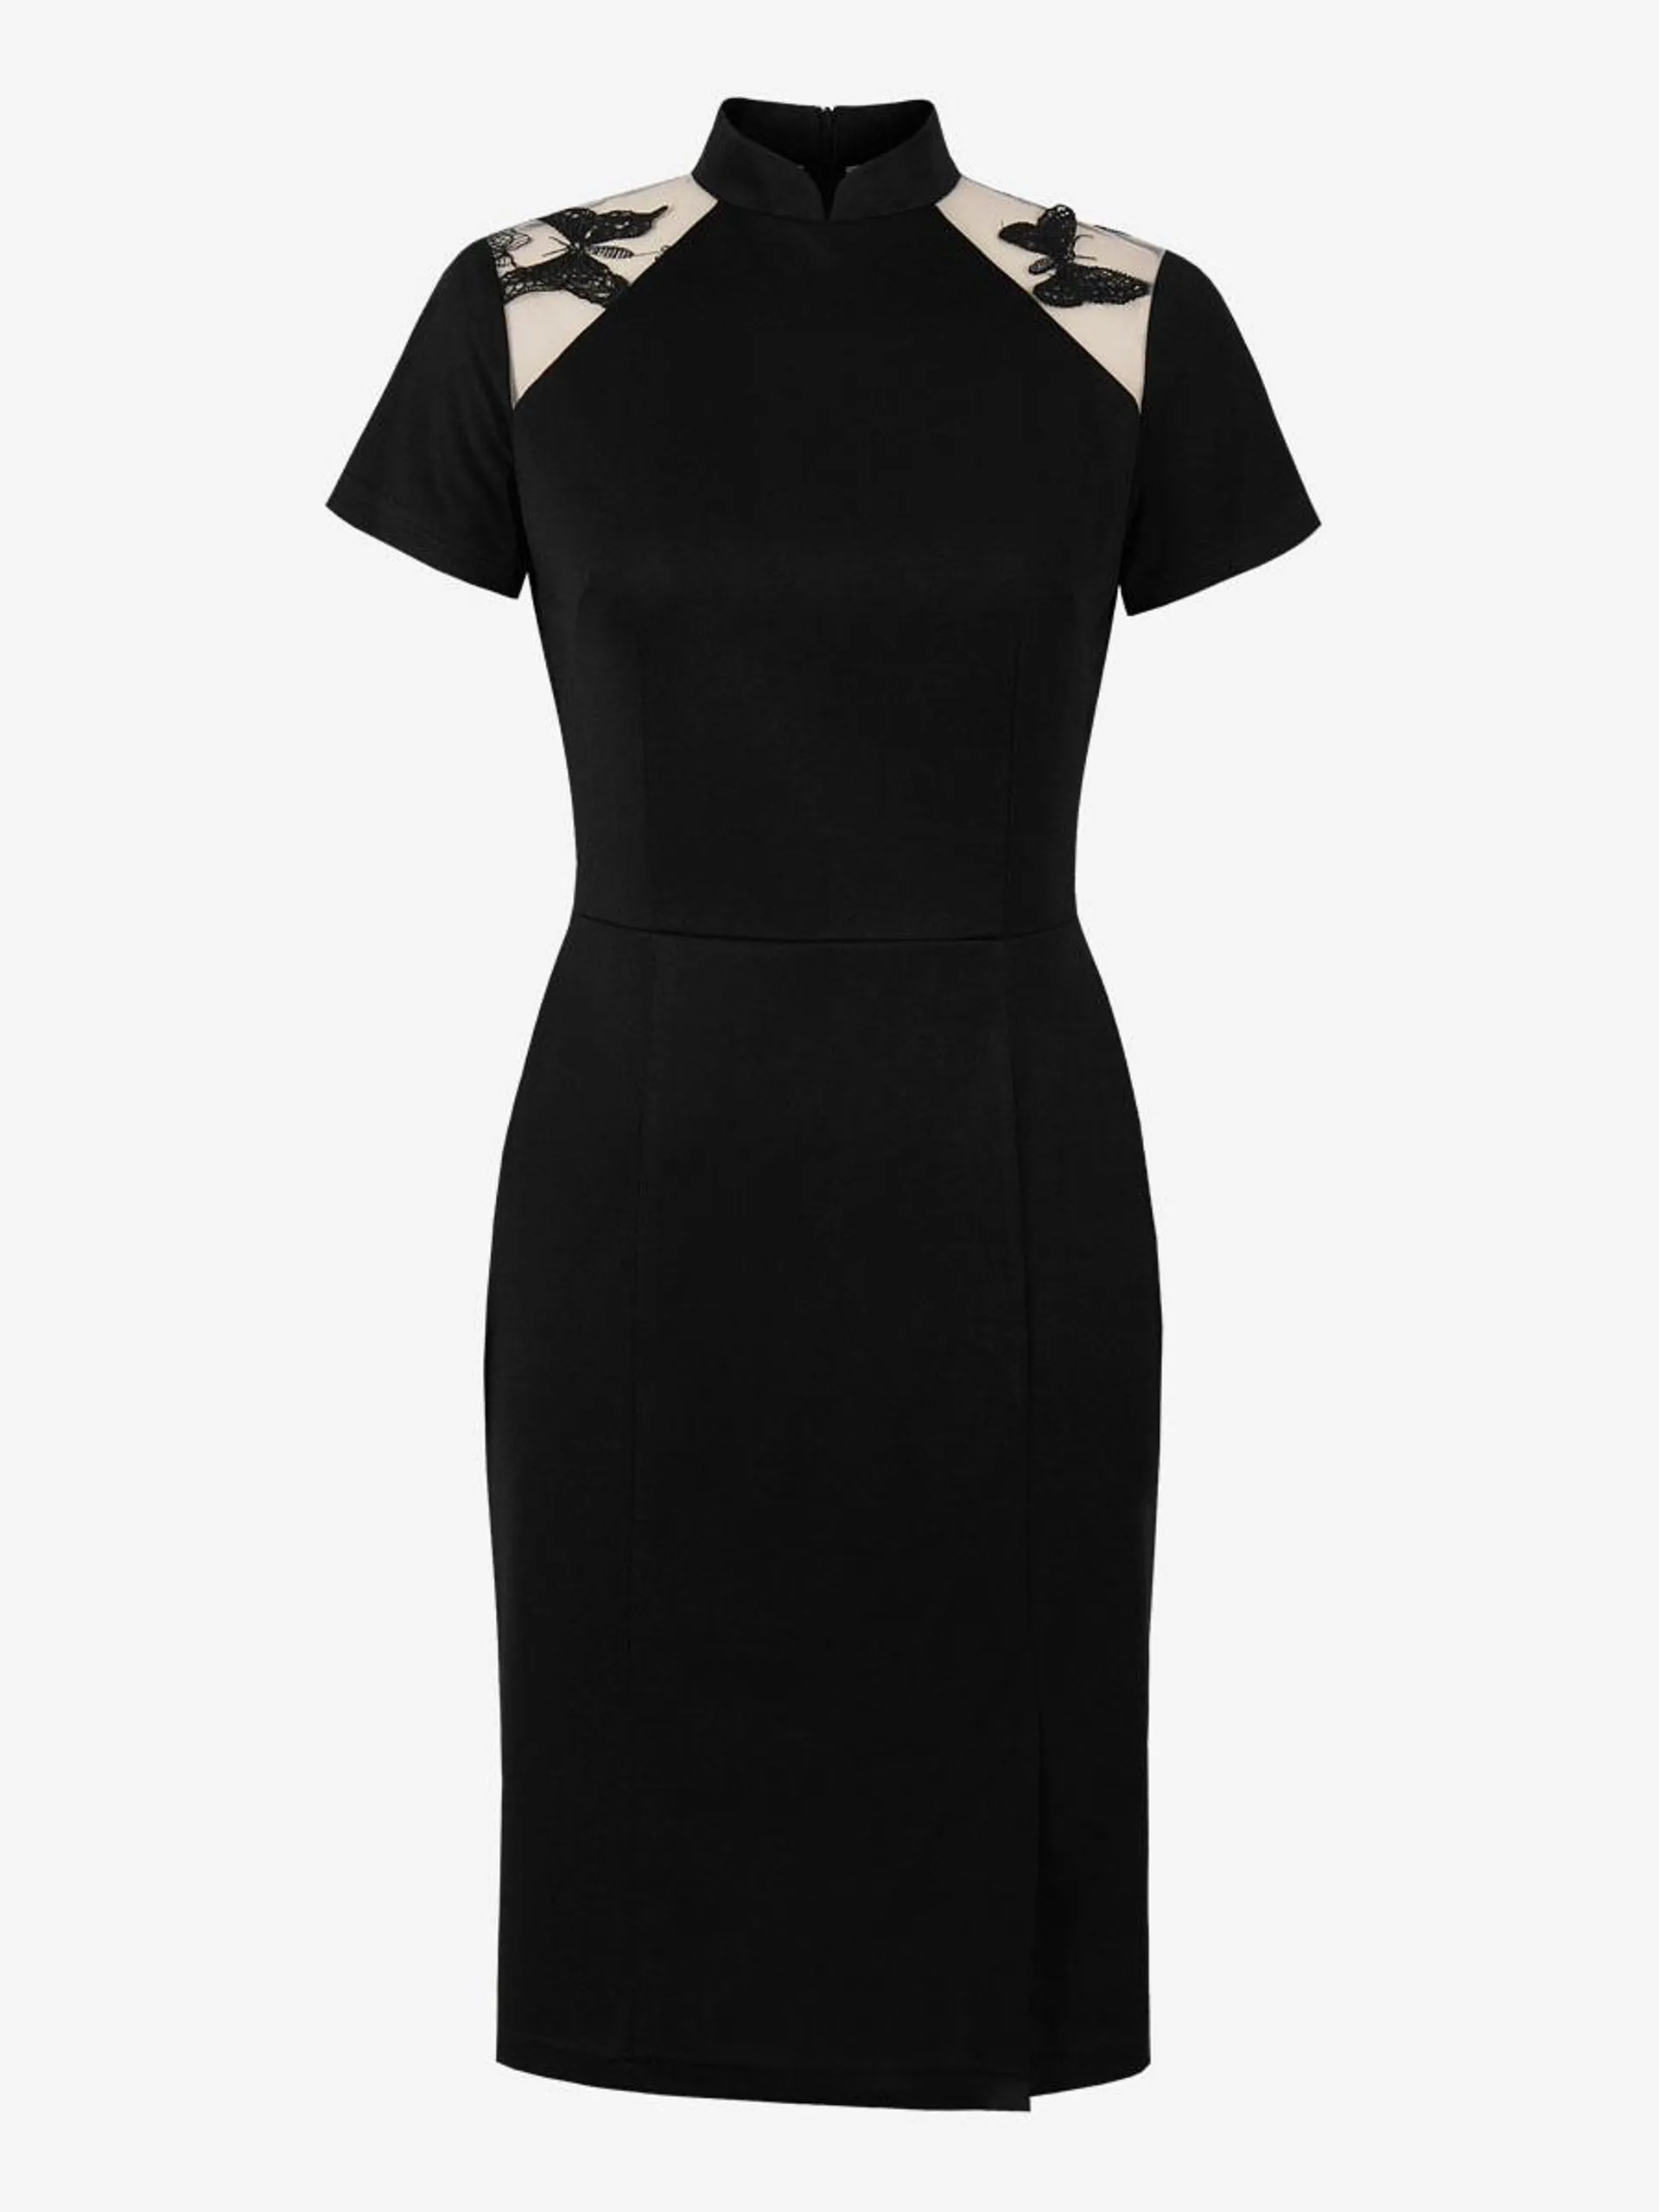 Bodycon Dresses Black High Collar Lace Elegant Short Sleeves Pencil Dress